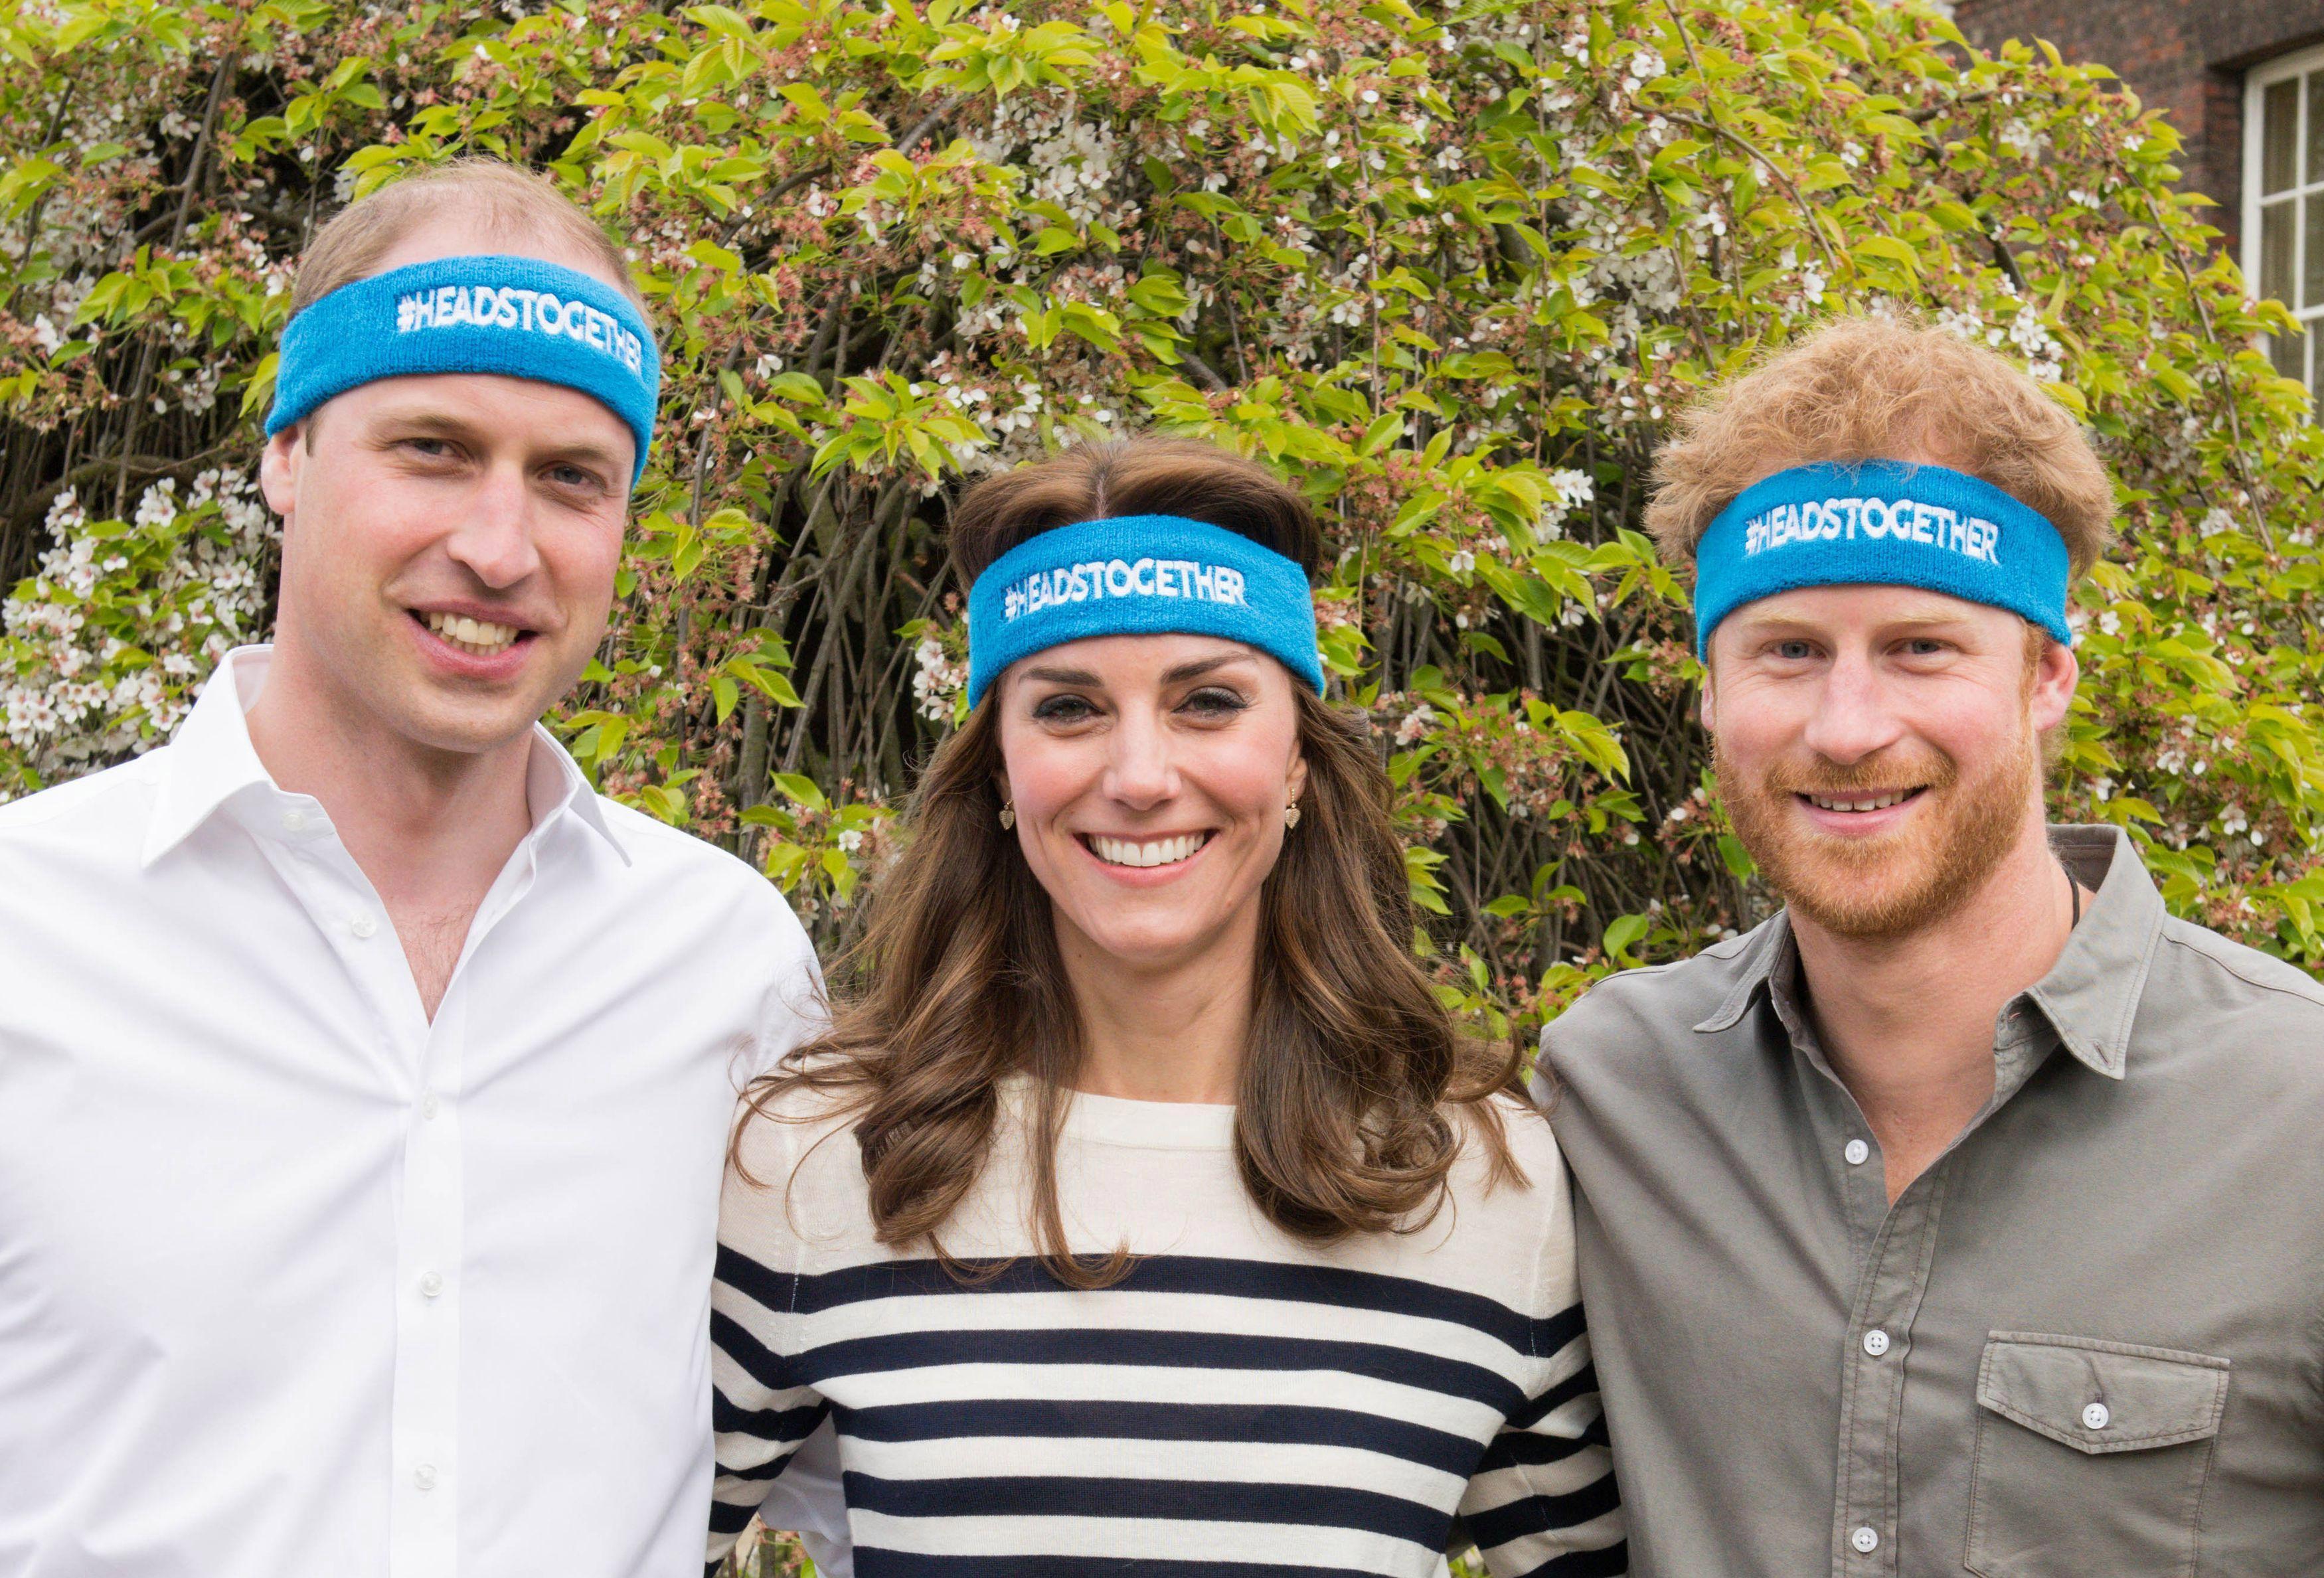  Le prince William, Kate Middleton et le prince Harry réunis pour Heads Together